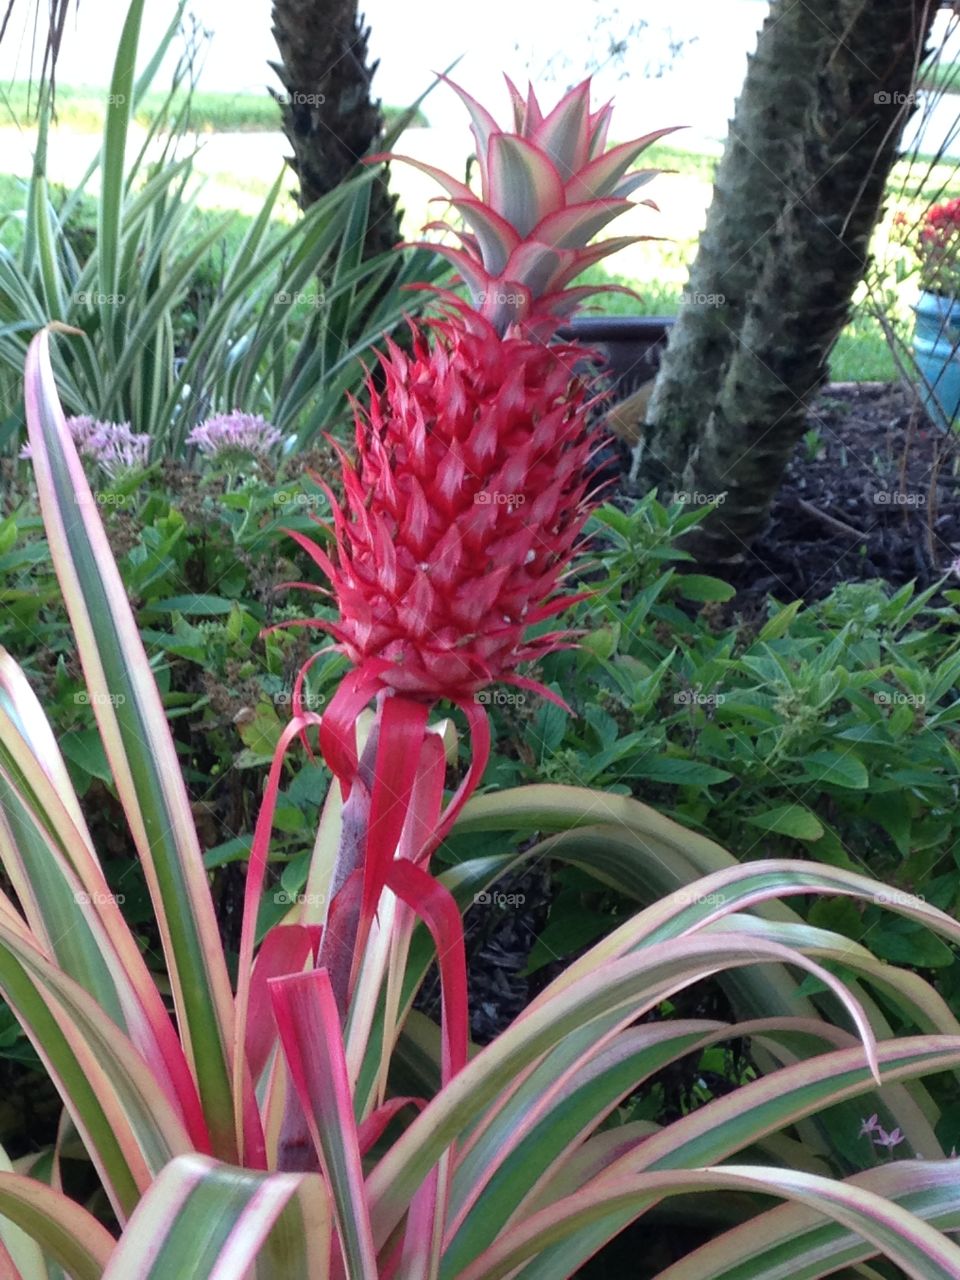 Florida pineapple plant 